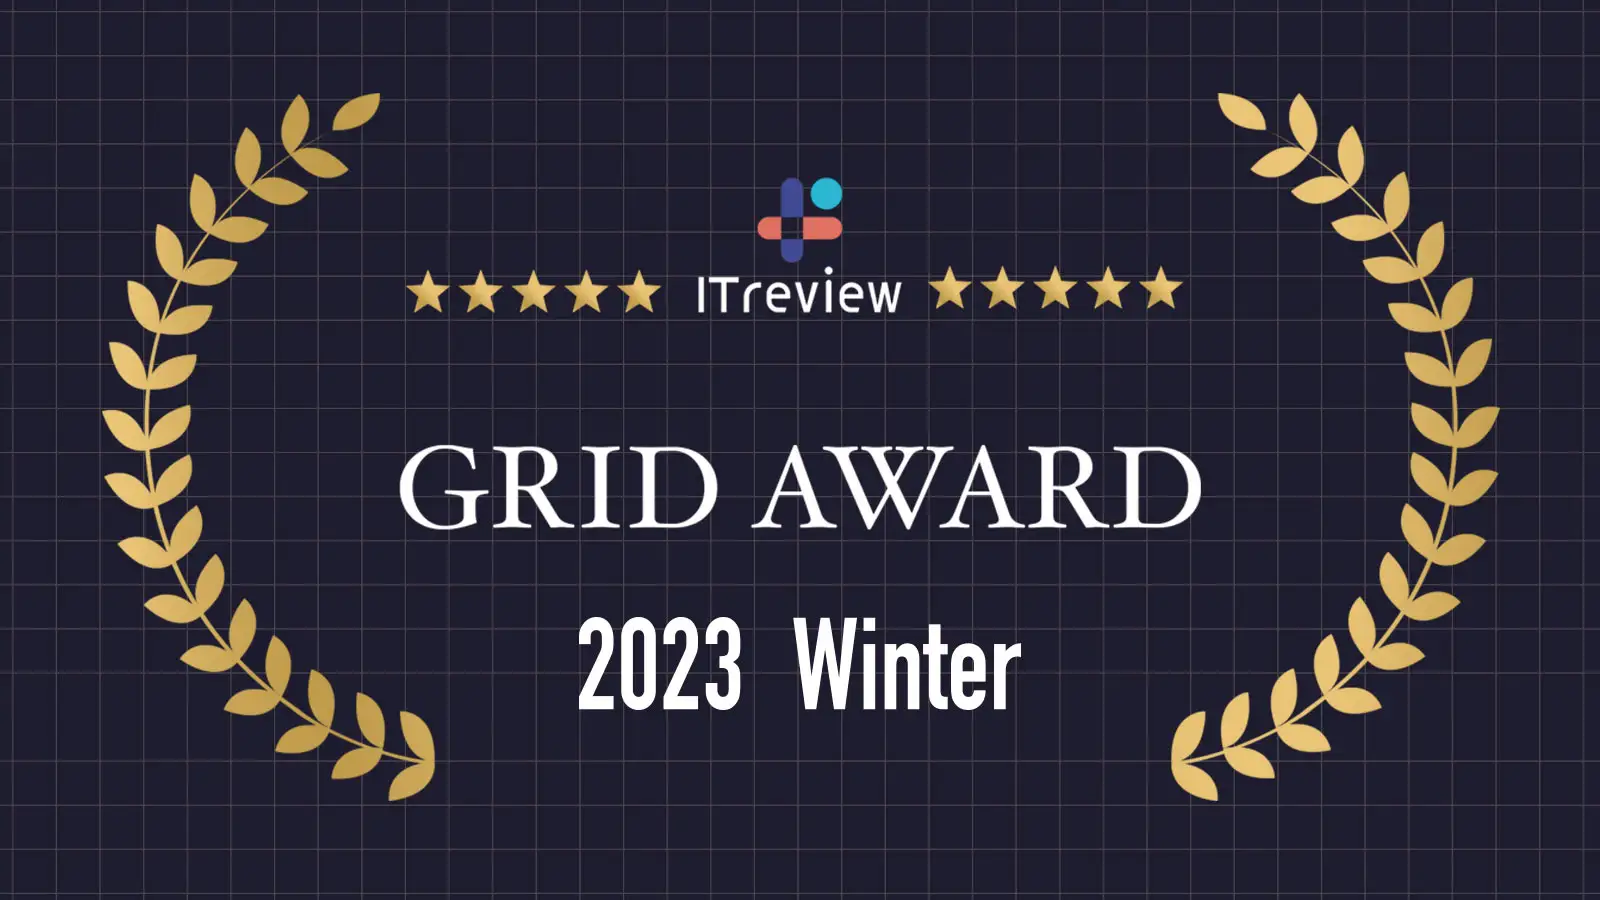 KARTE Blocksが「ITreview Grid Award 2023 Winter」の「ABテストツール」「LPOツール」部門にて、2期連続「High Performer」受賞